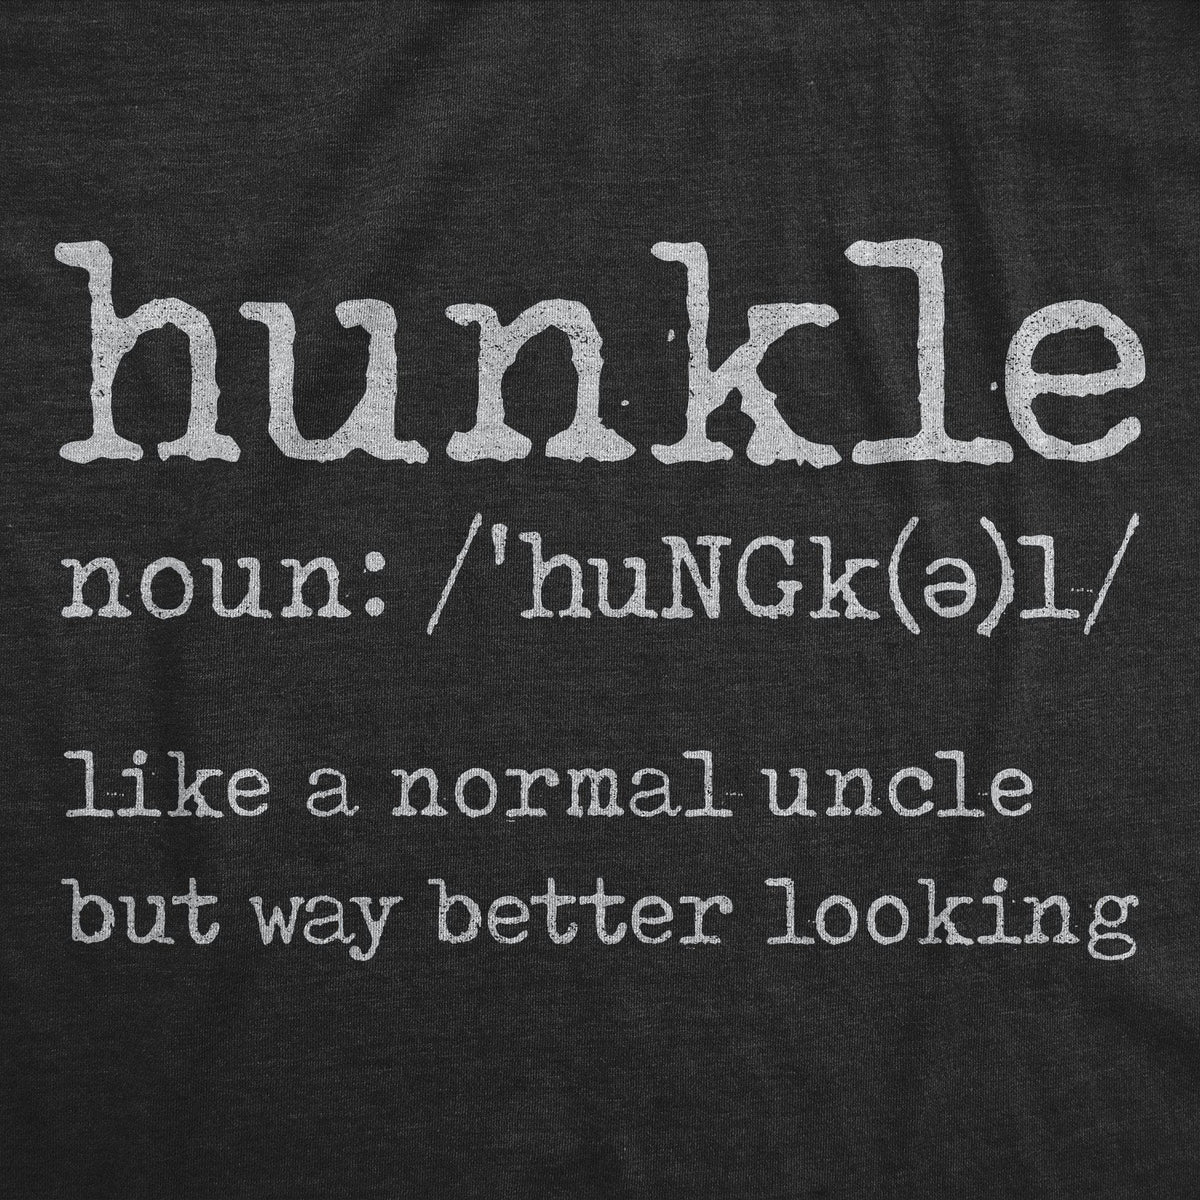 Hunkle Men&#39;s Tshirt - Crazy Dog T-Shirts